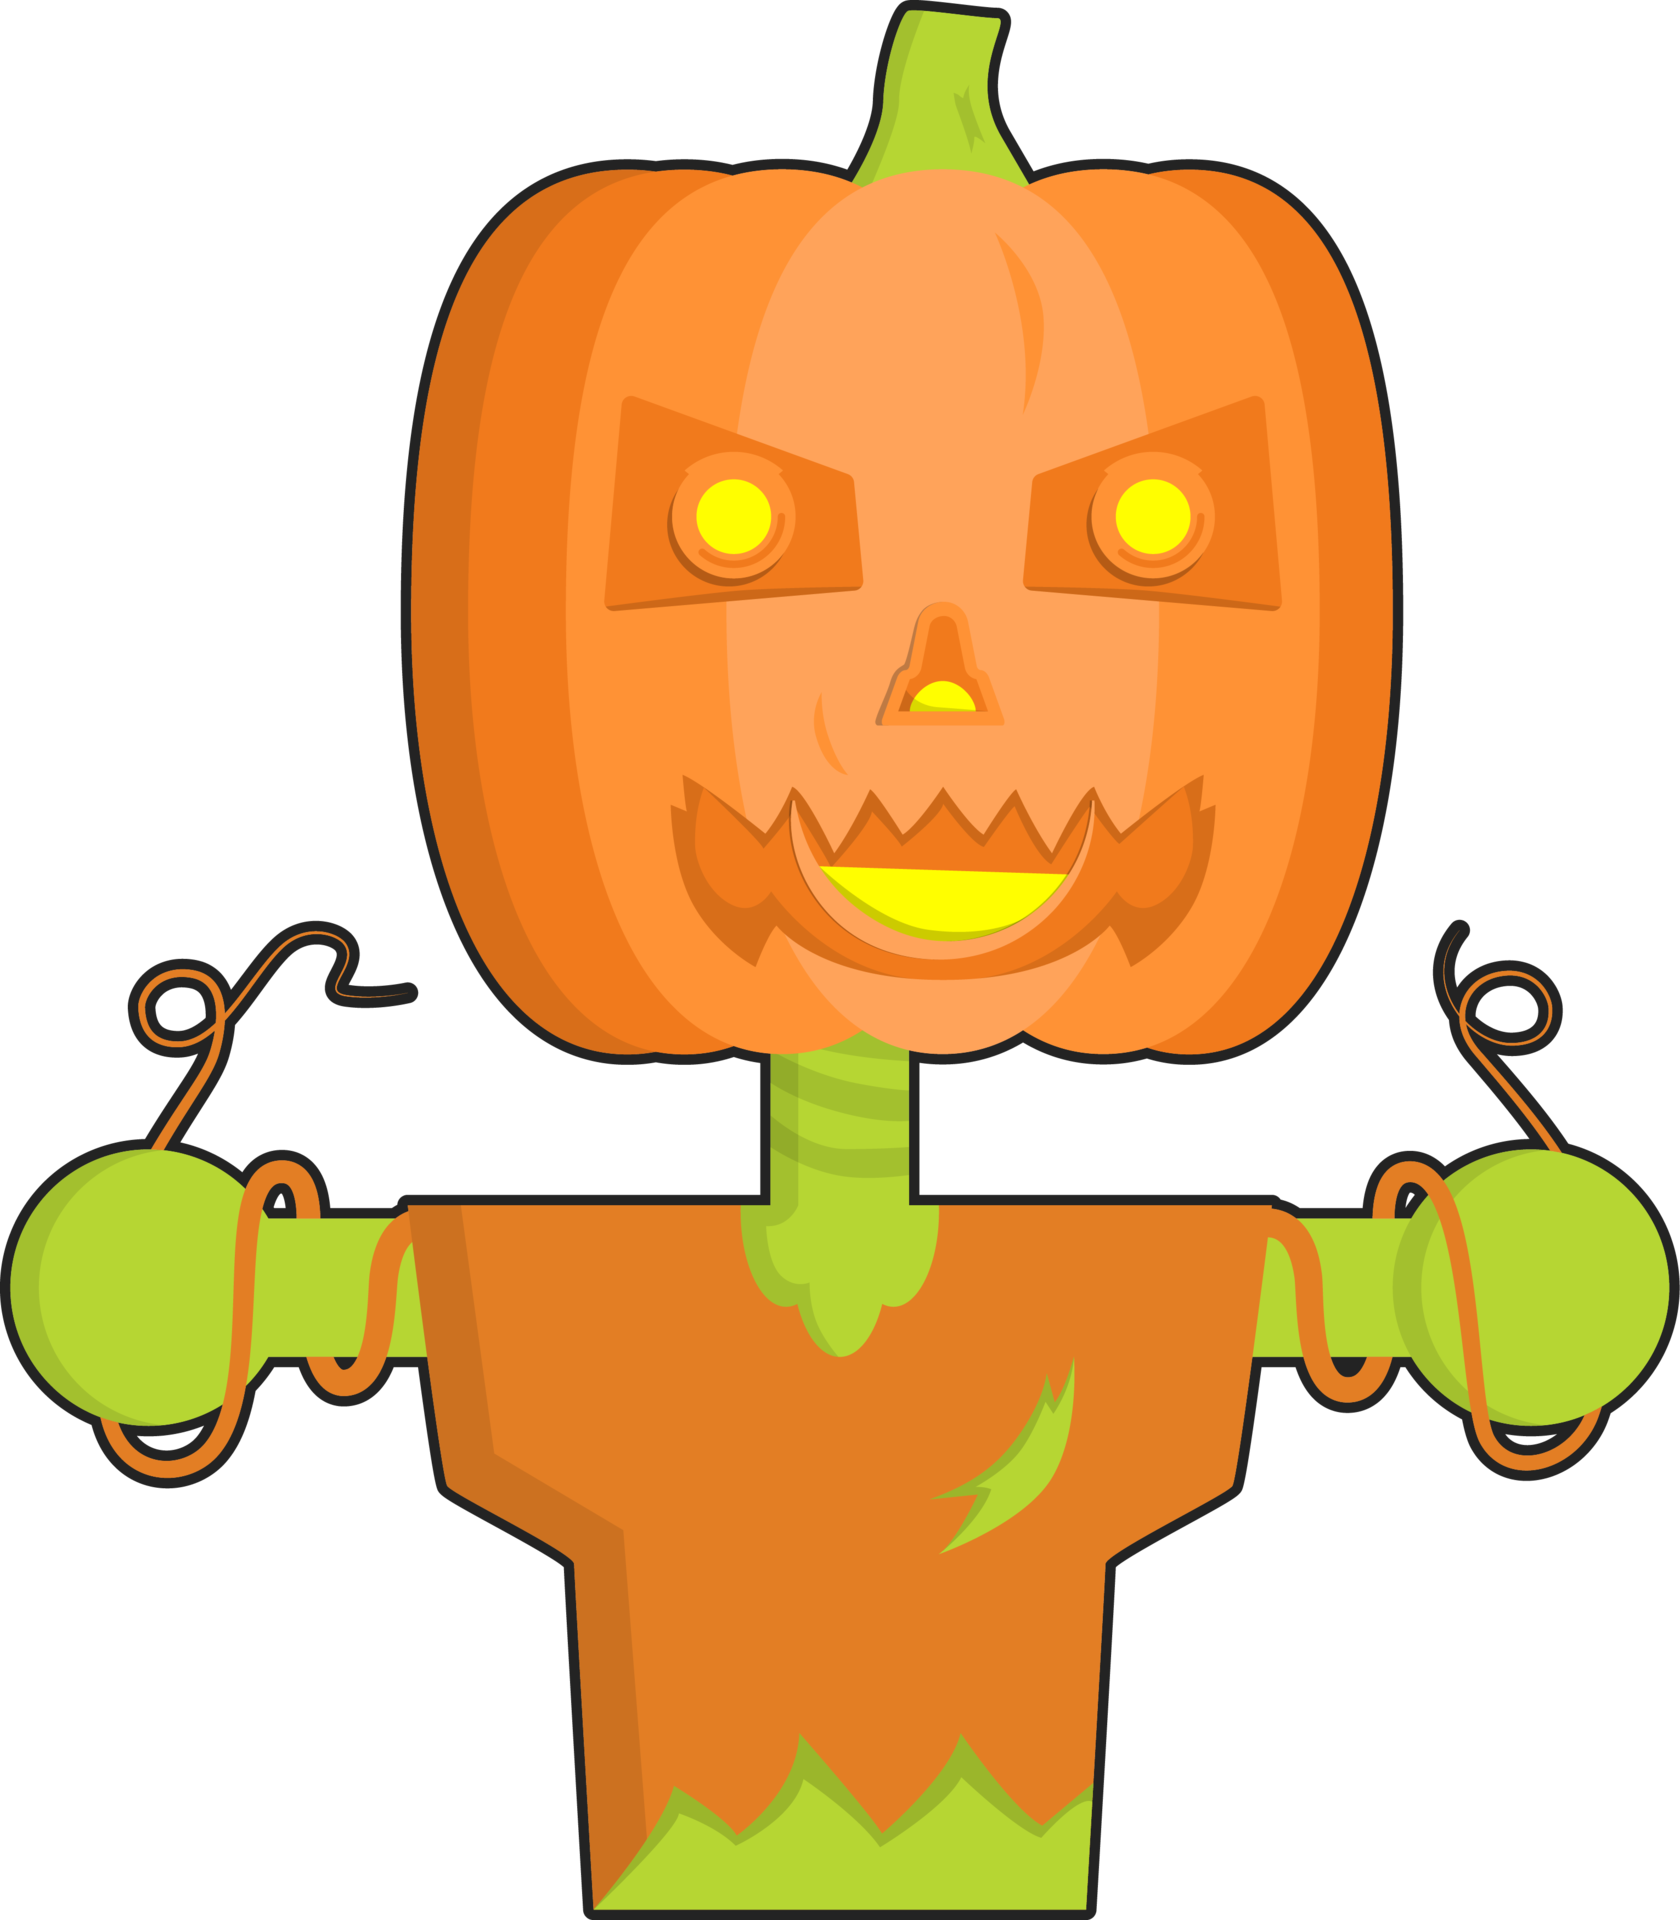 Halloween cartoon character. Cute pumpkin ghost isolated on transparent ...